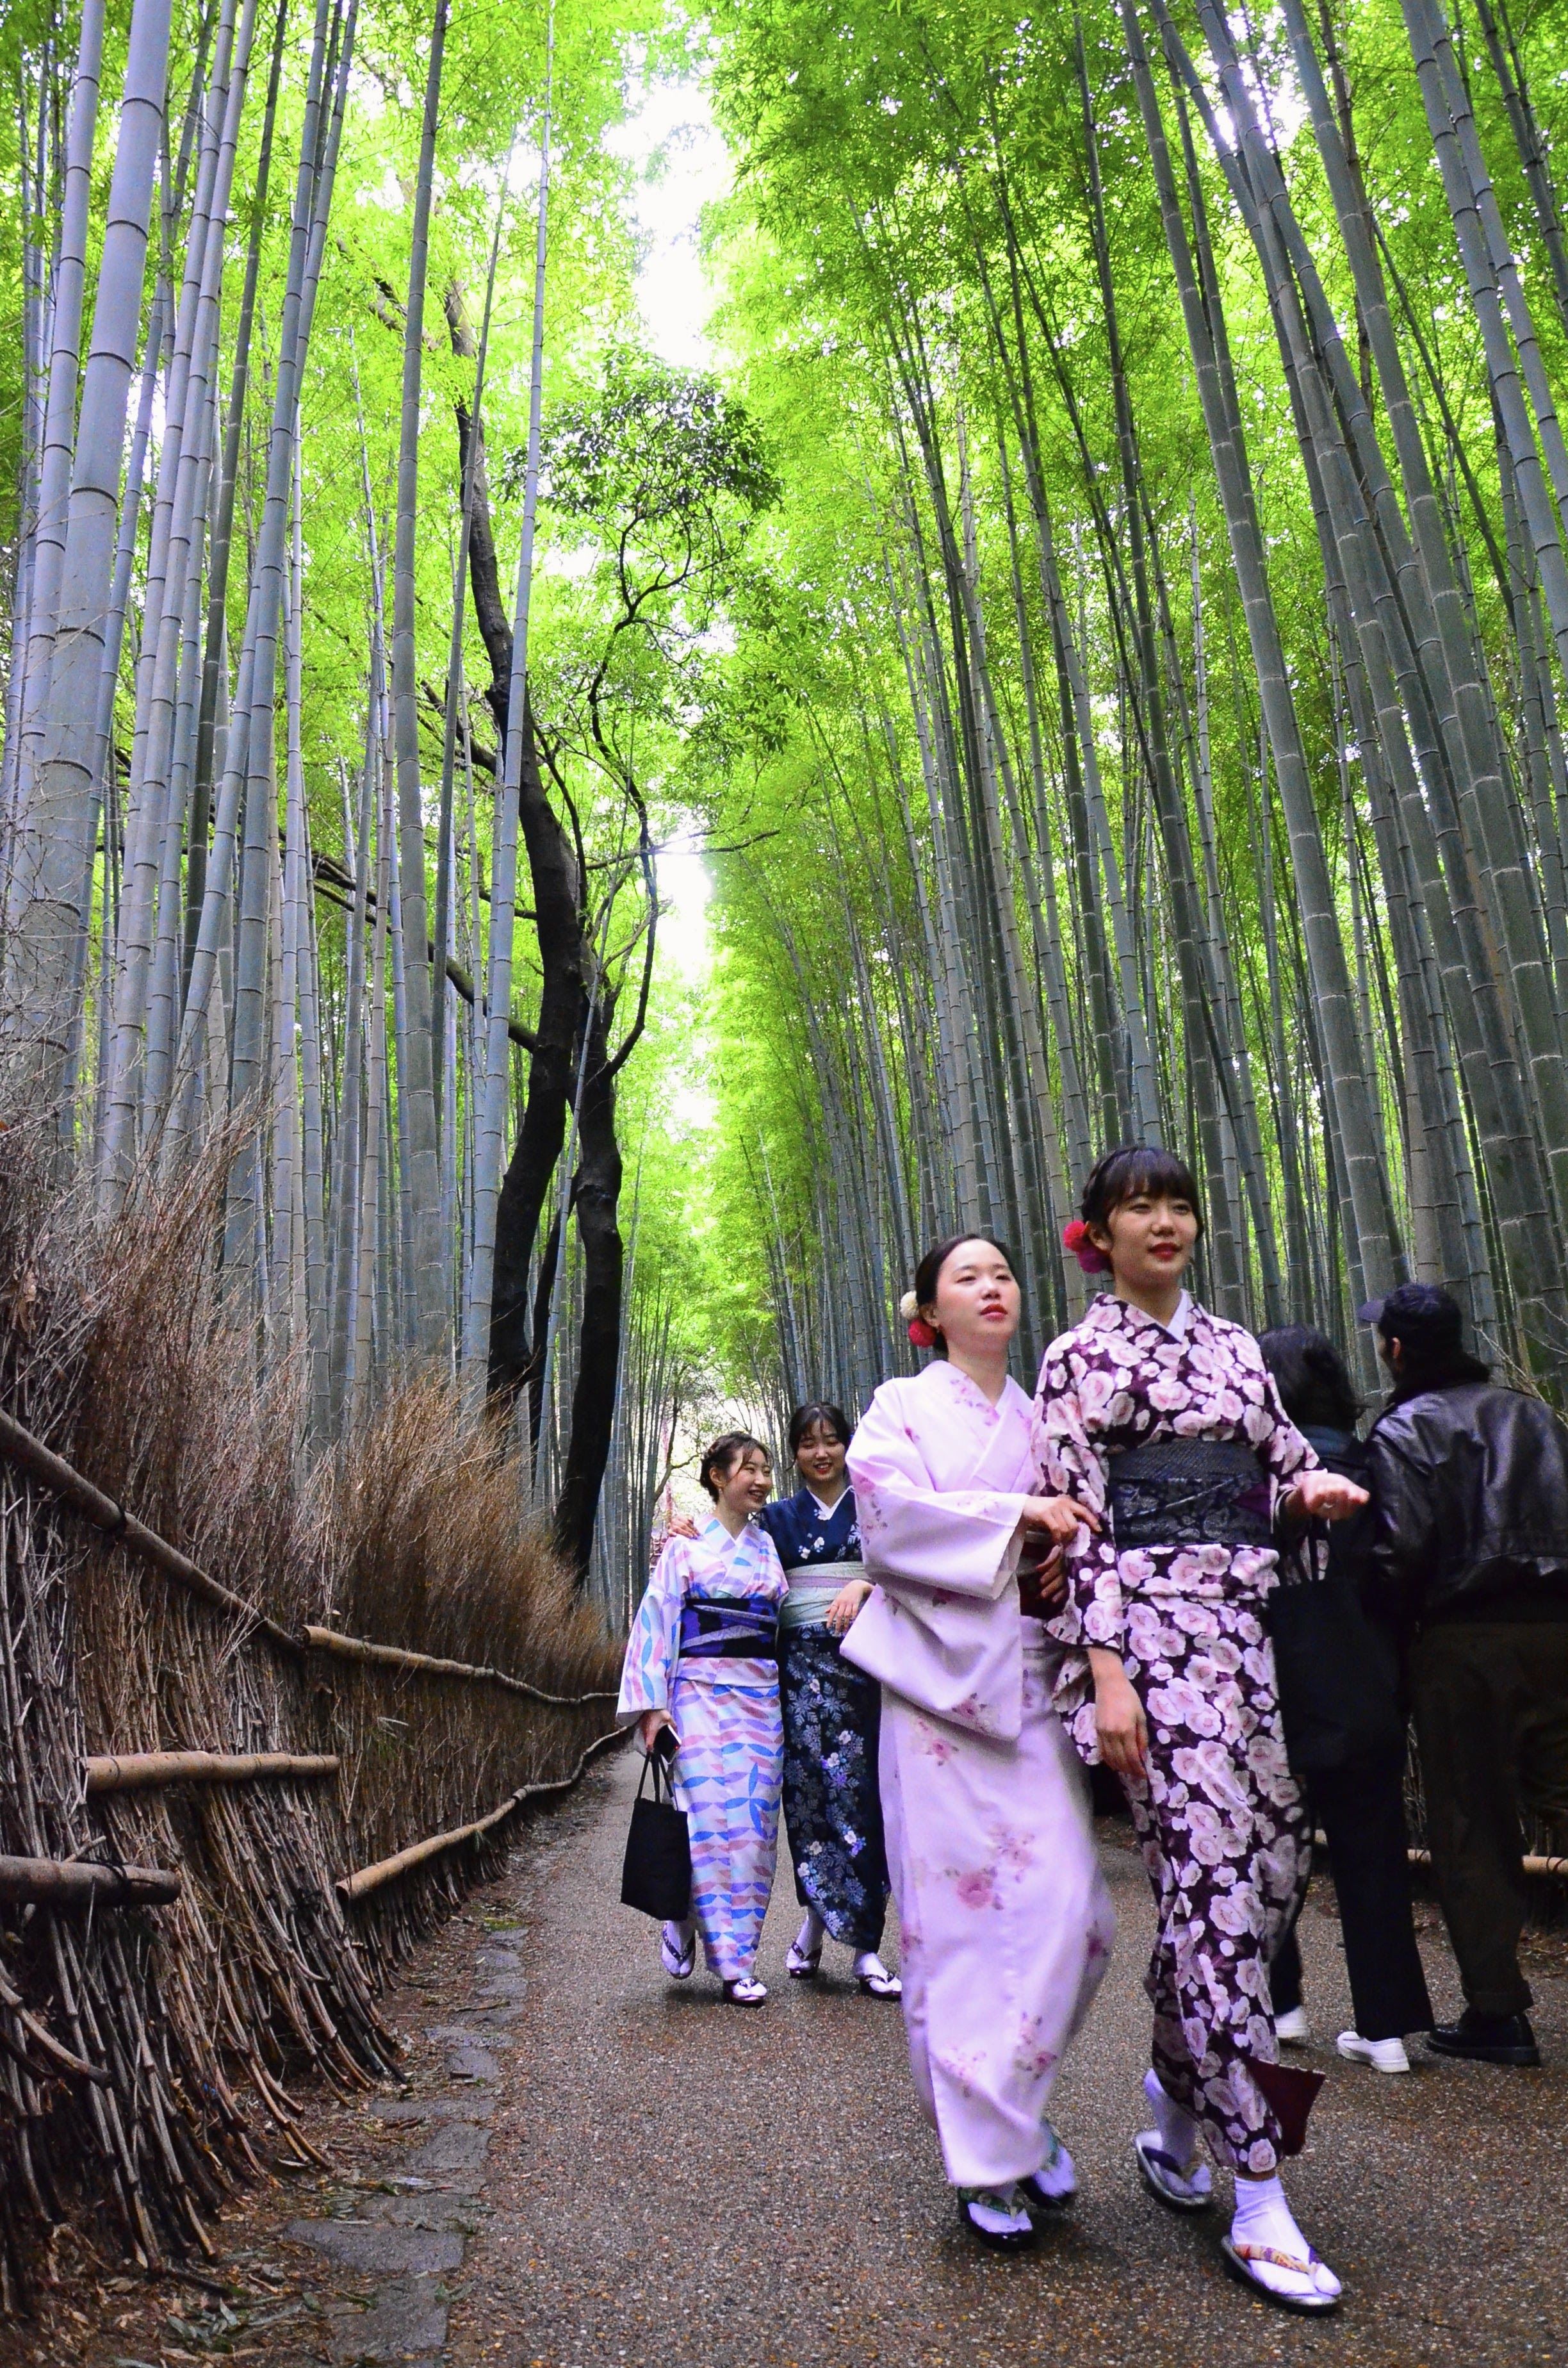 La forêt de bamboue de Arashiyama 